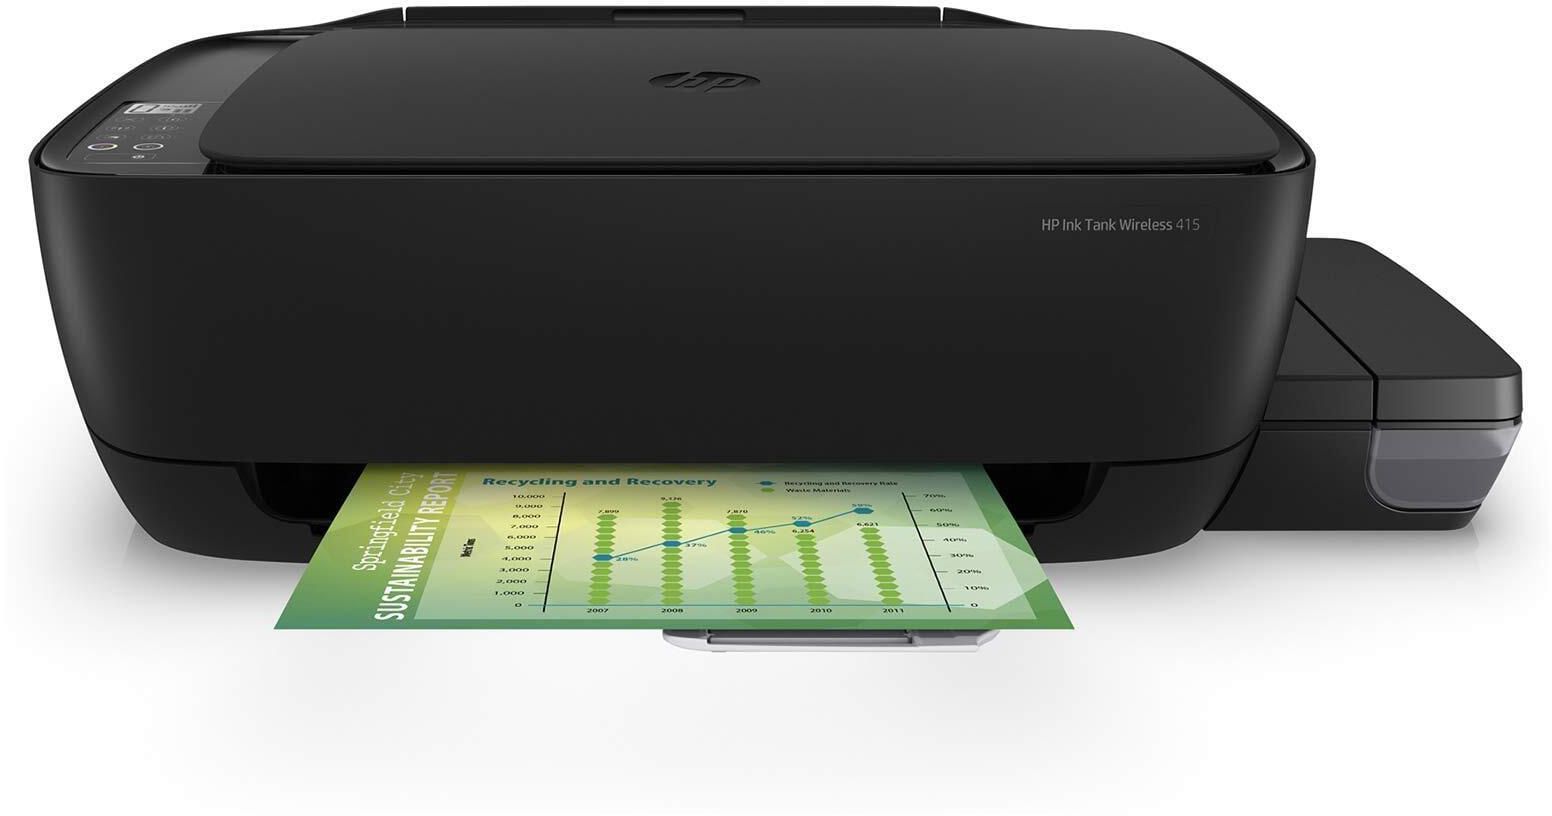 HP 415 Color Ink Tank Wireless Printer